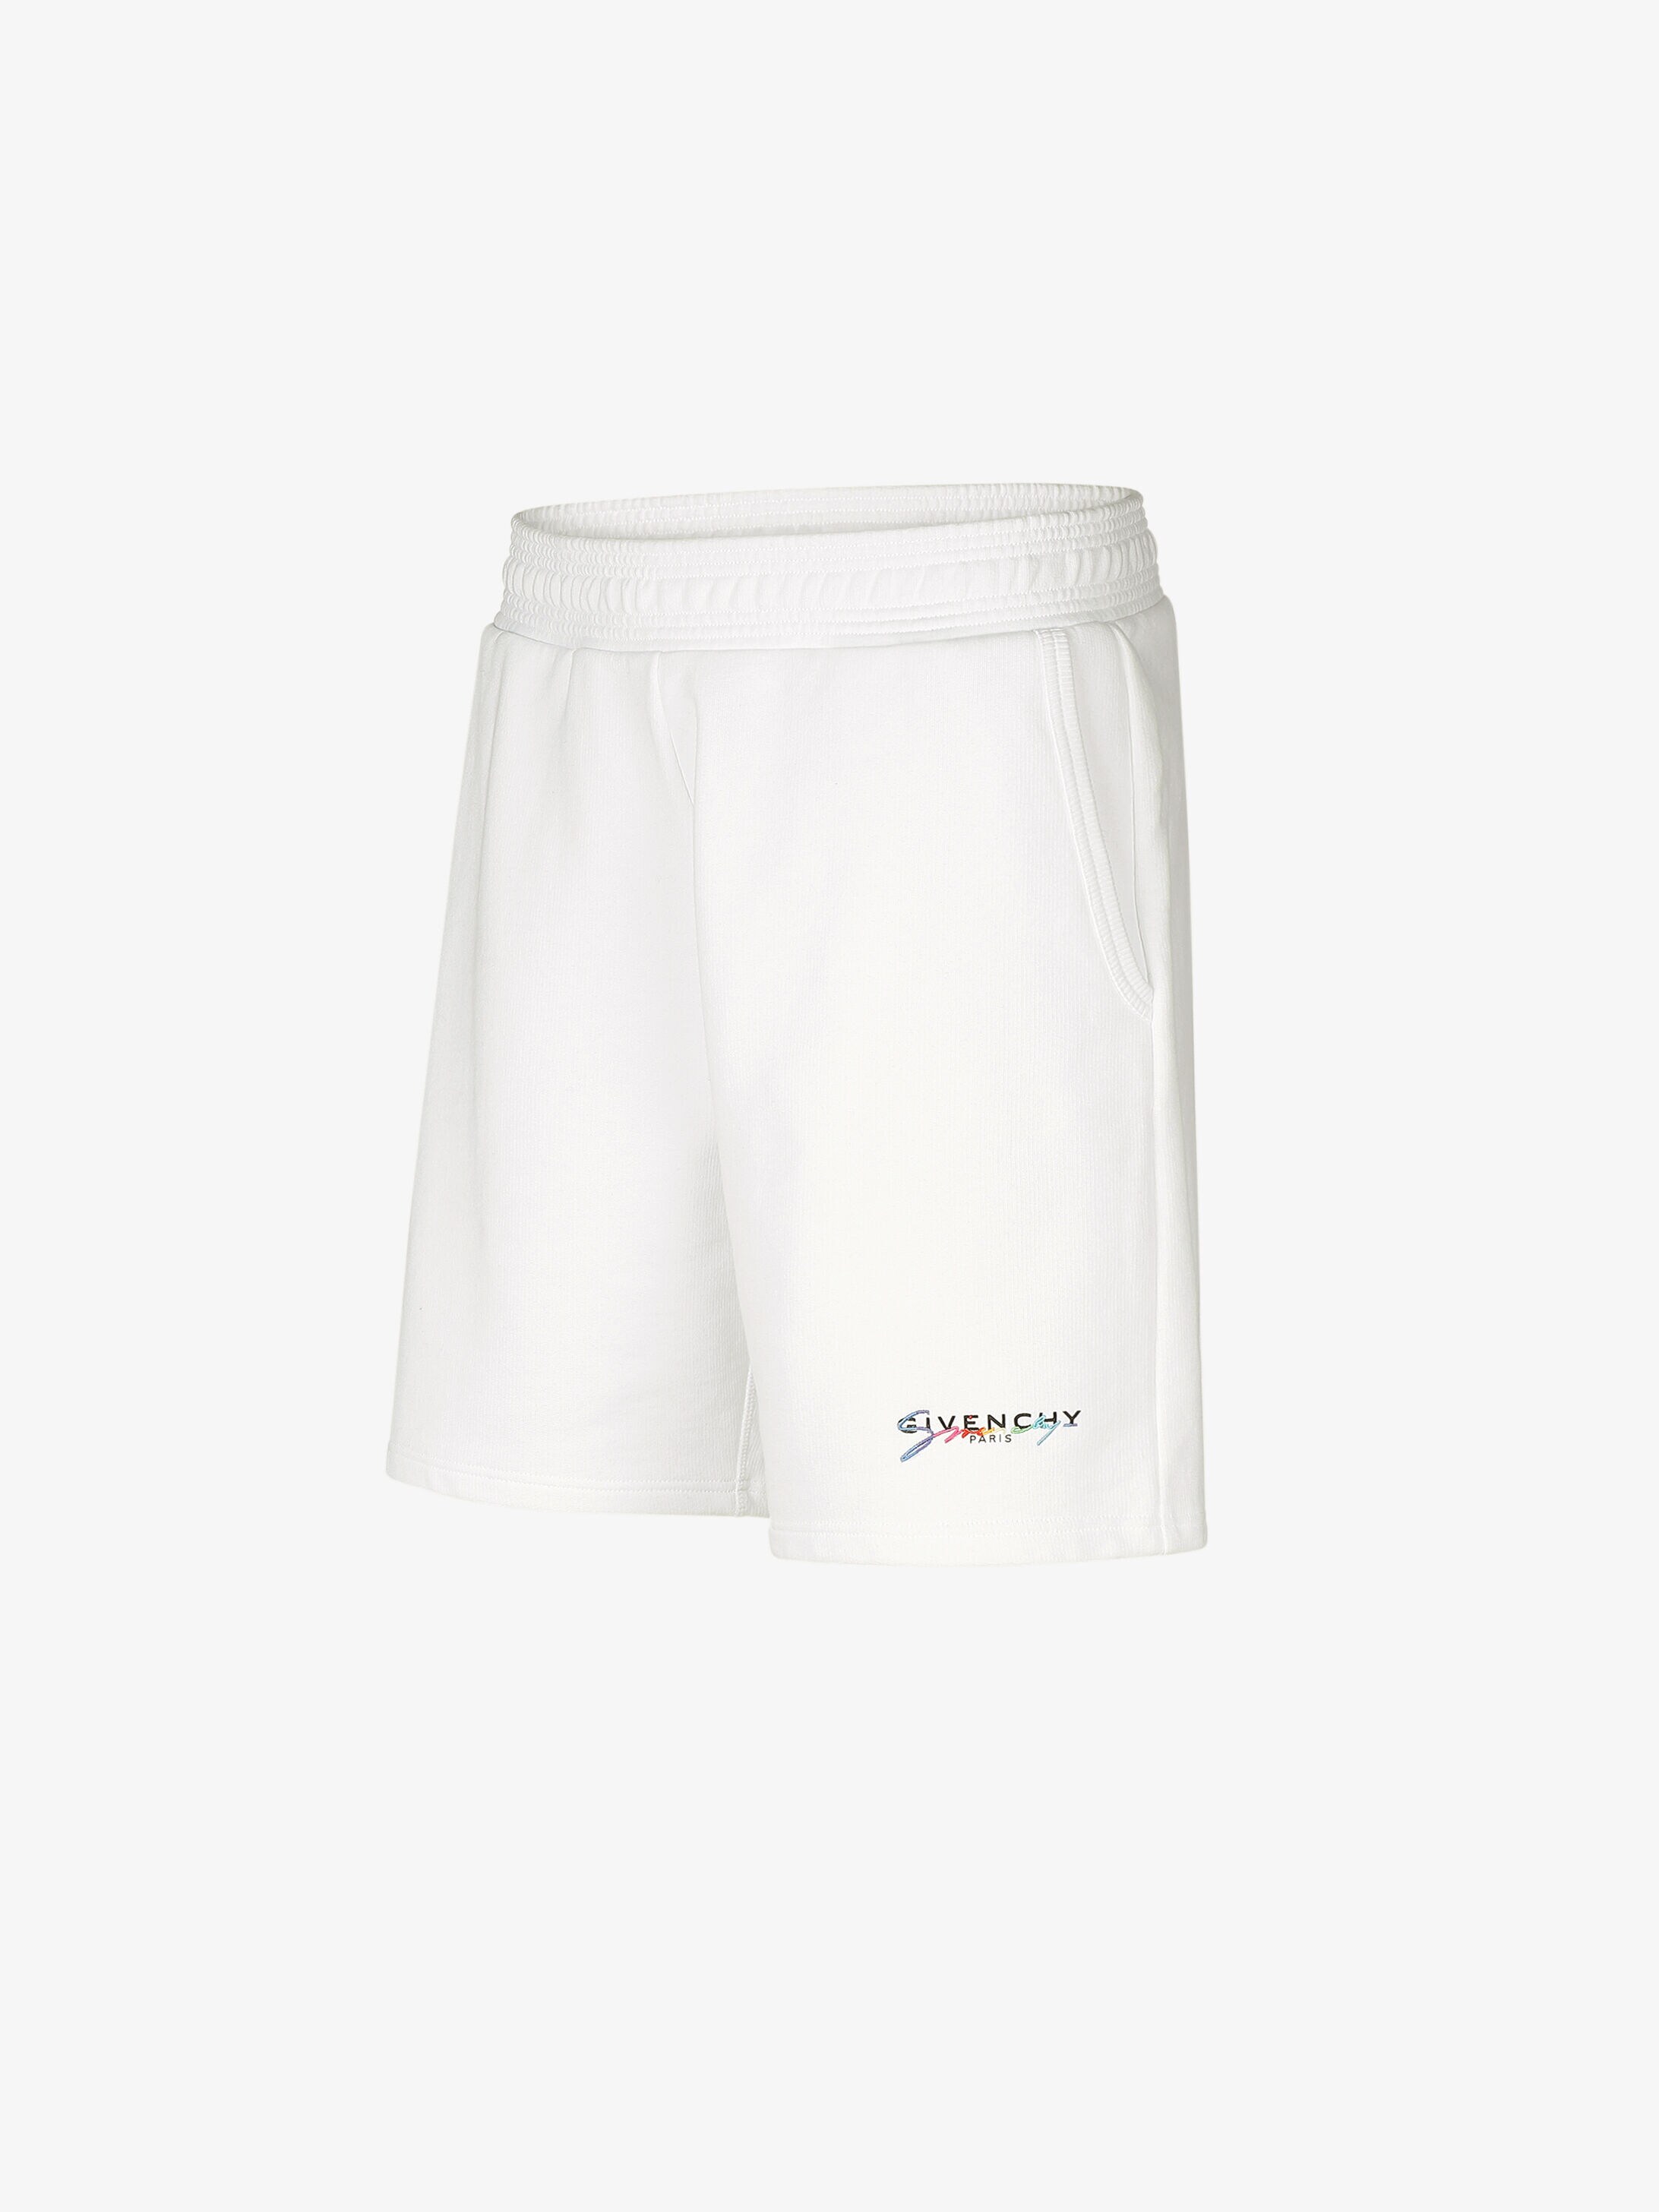 white givenchy shorts